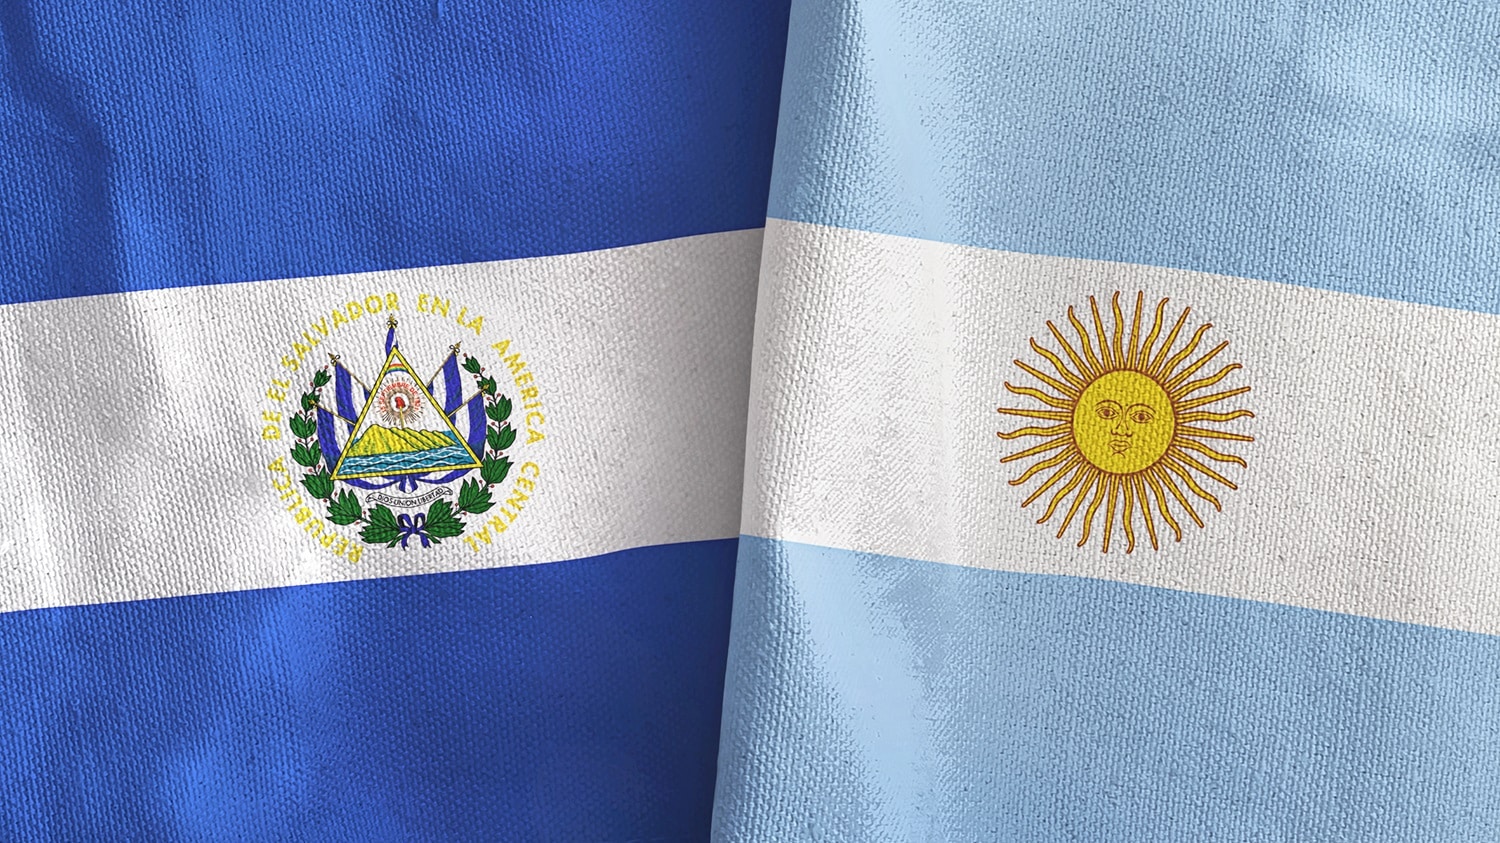 The flags of Argentina and El Salvador.